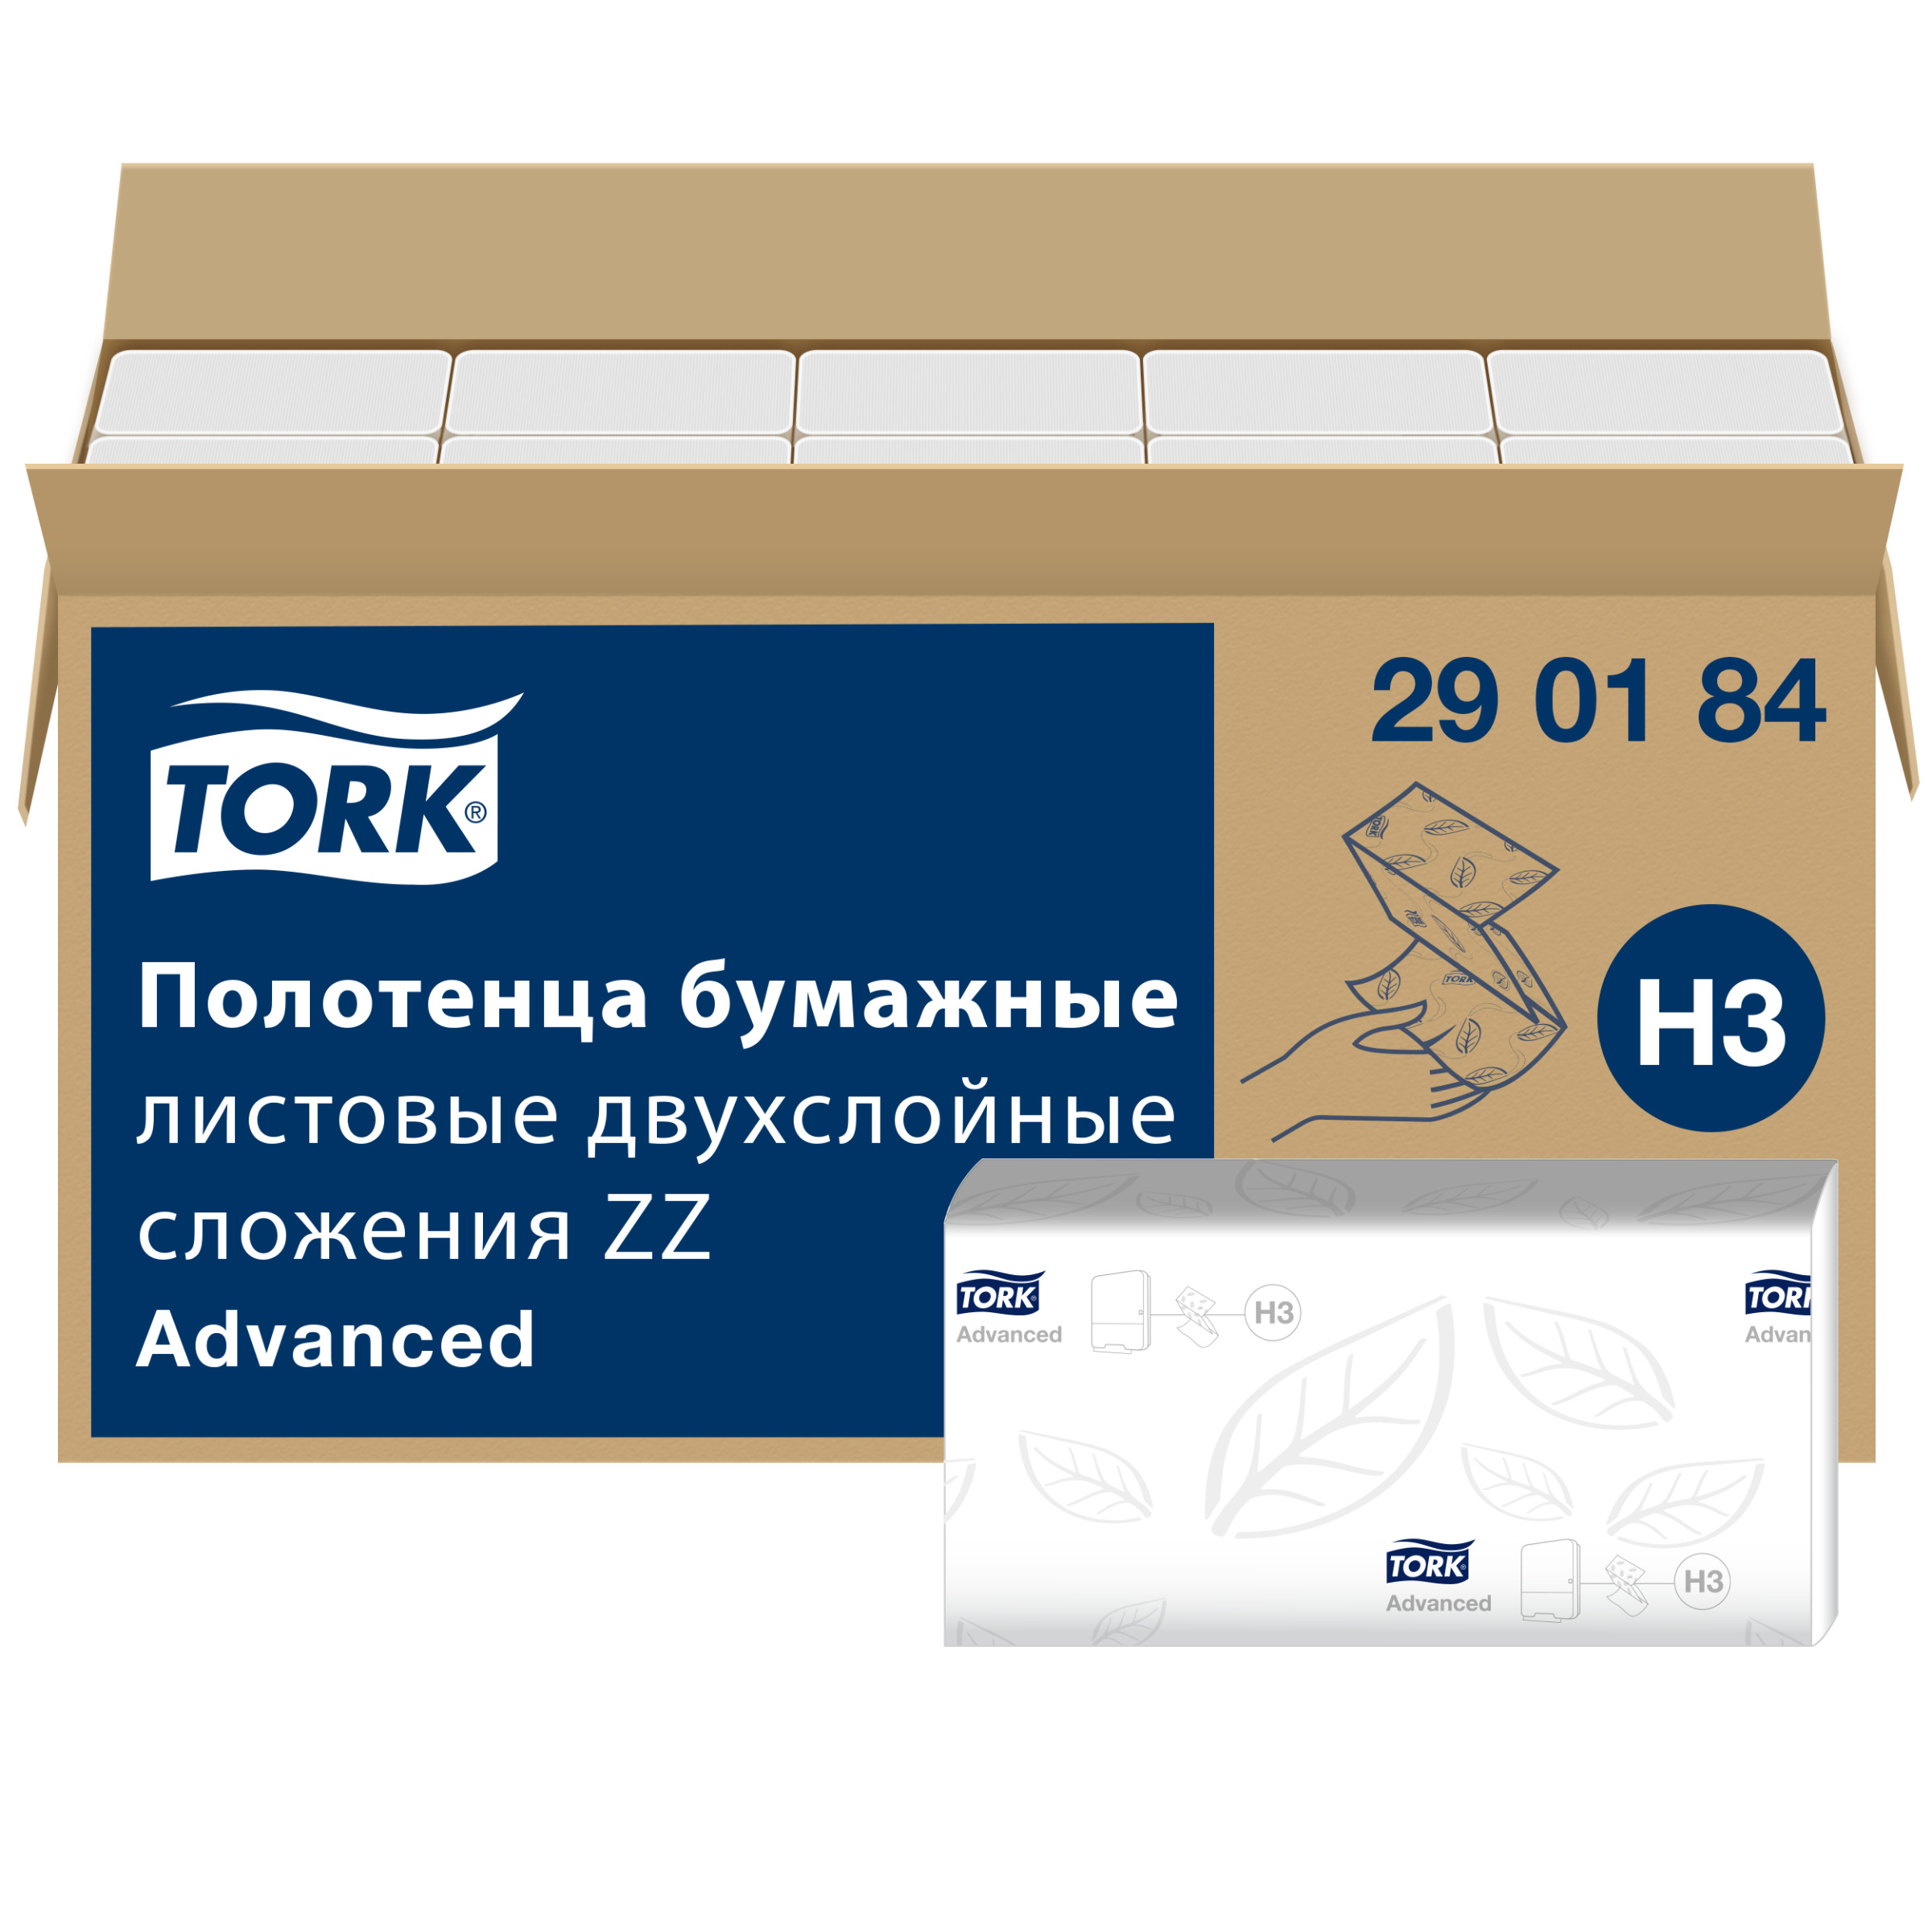 Полотенце tork advanced. Торк ZZ 120108. 290184 Торк. Tork h3 Advanced. 290184 Торк полотенца бумажные.